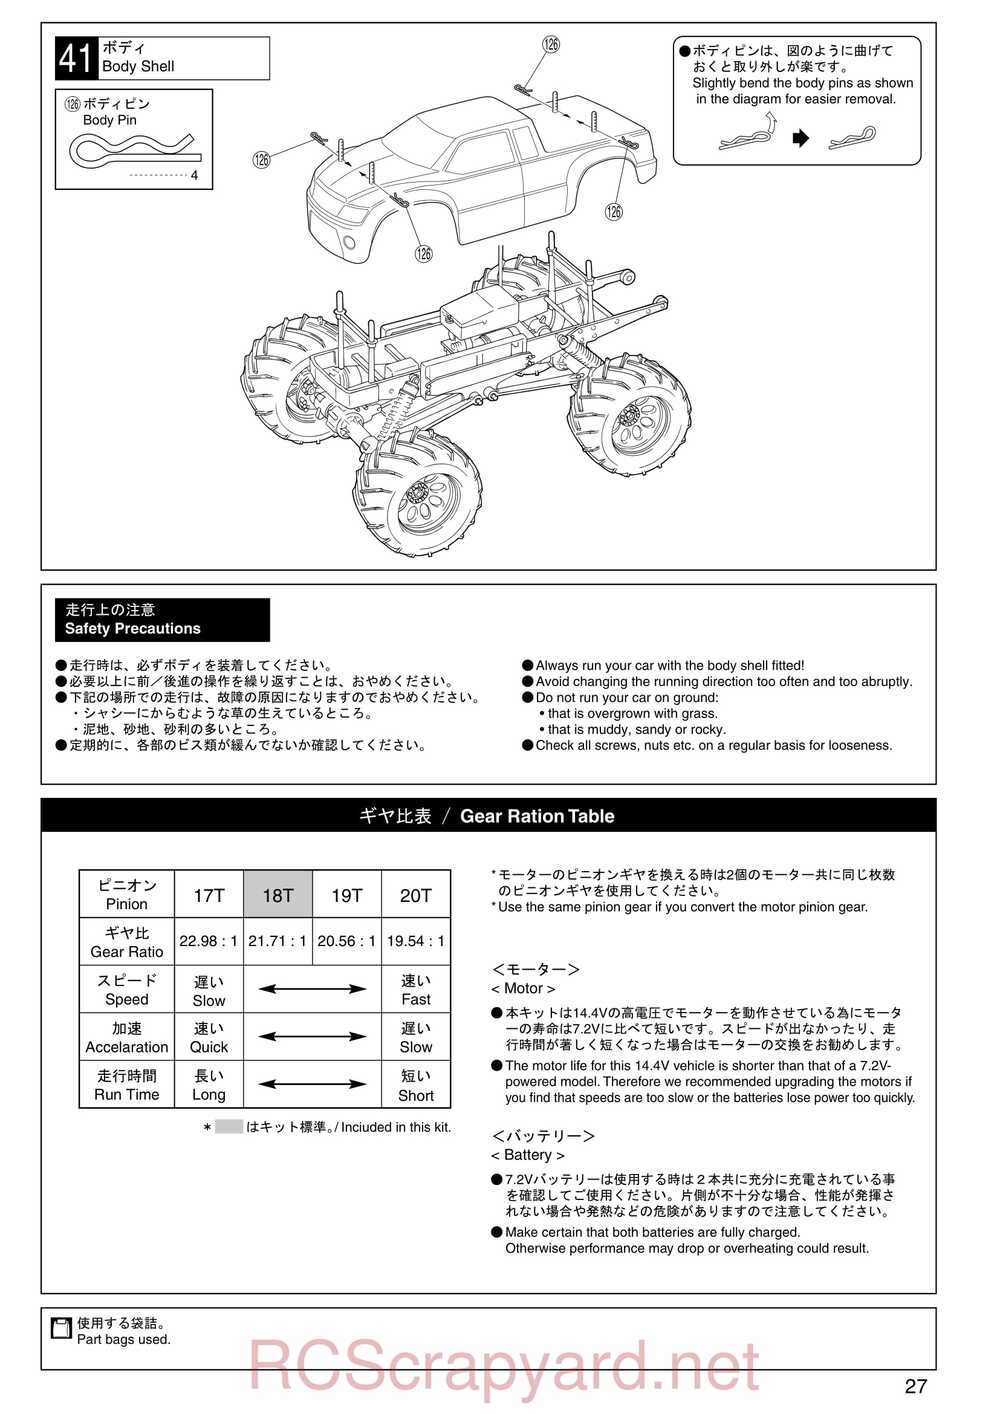 Kyosho - 30521b - Twin-Force - Manual - Page 27